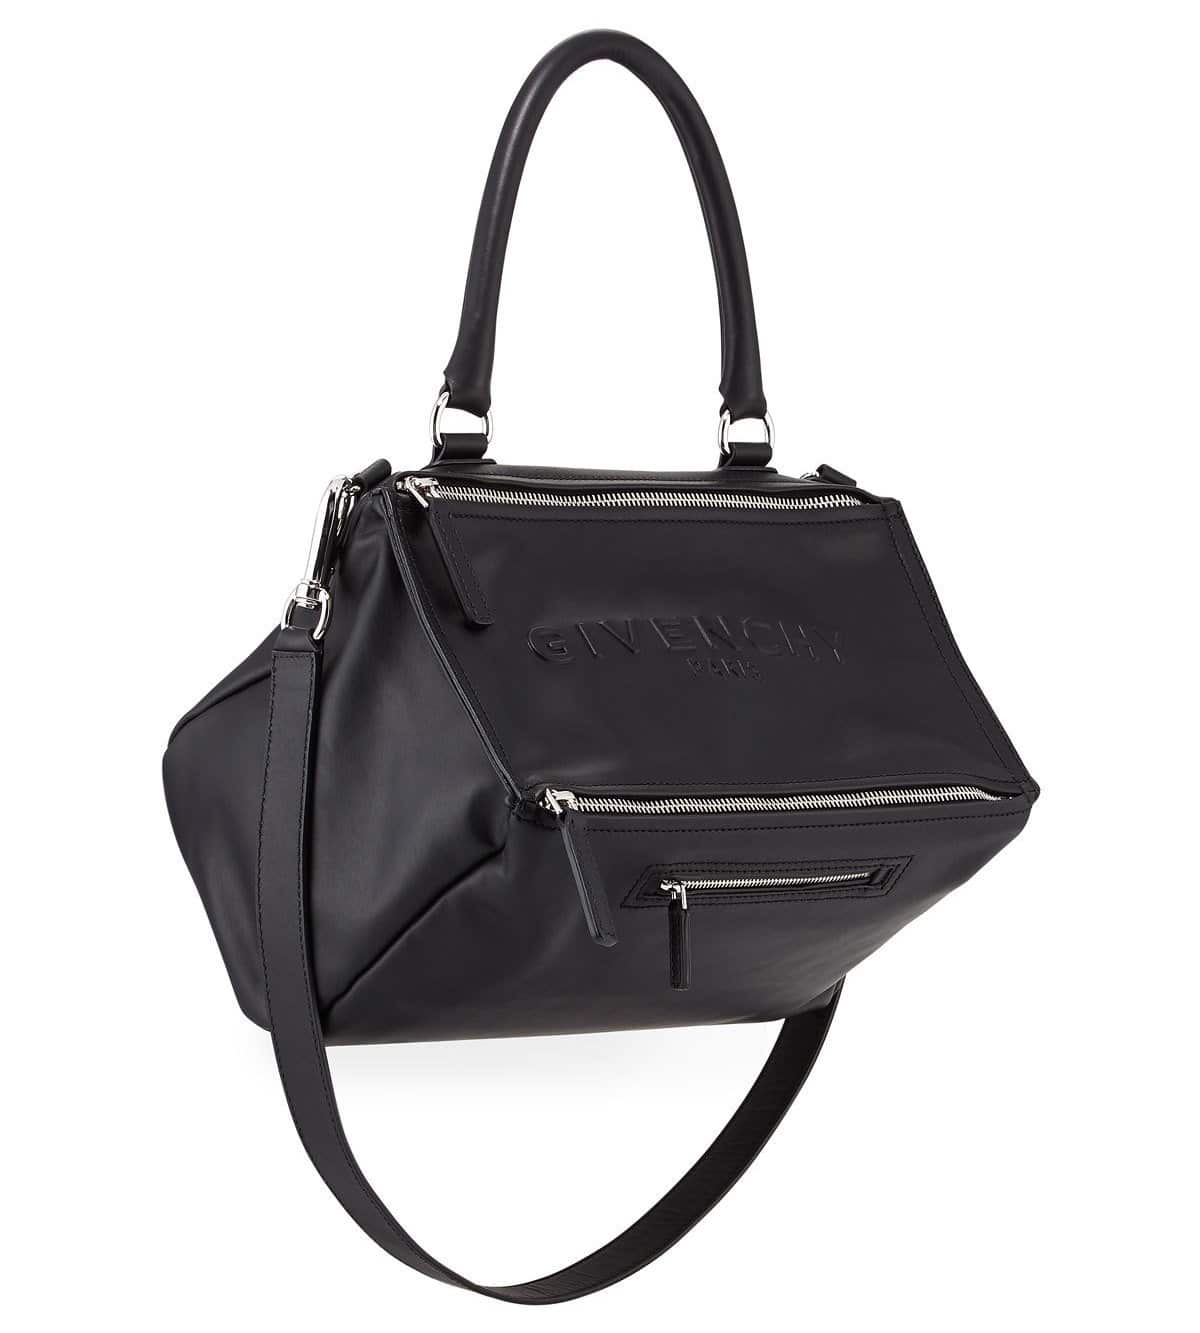 Givenchy Pandora Medium Debossed Leather Satchel Bag